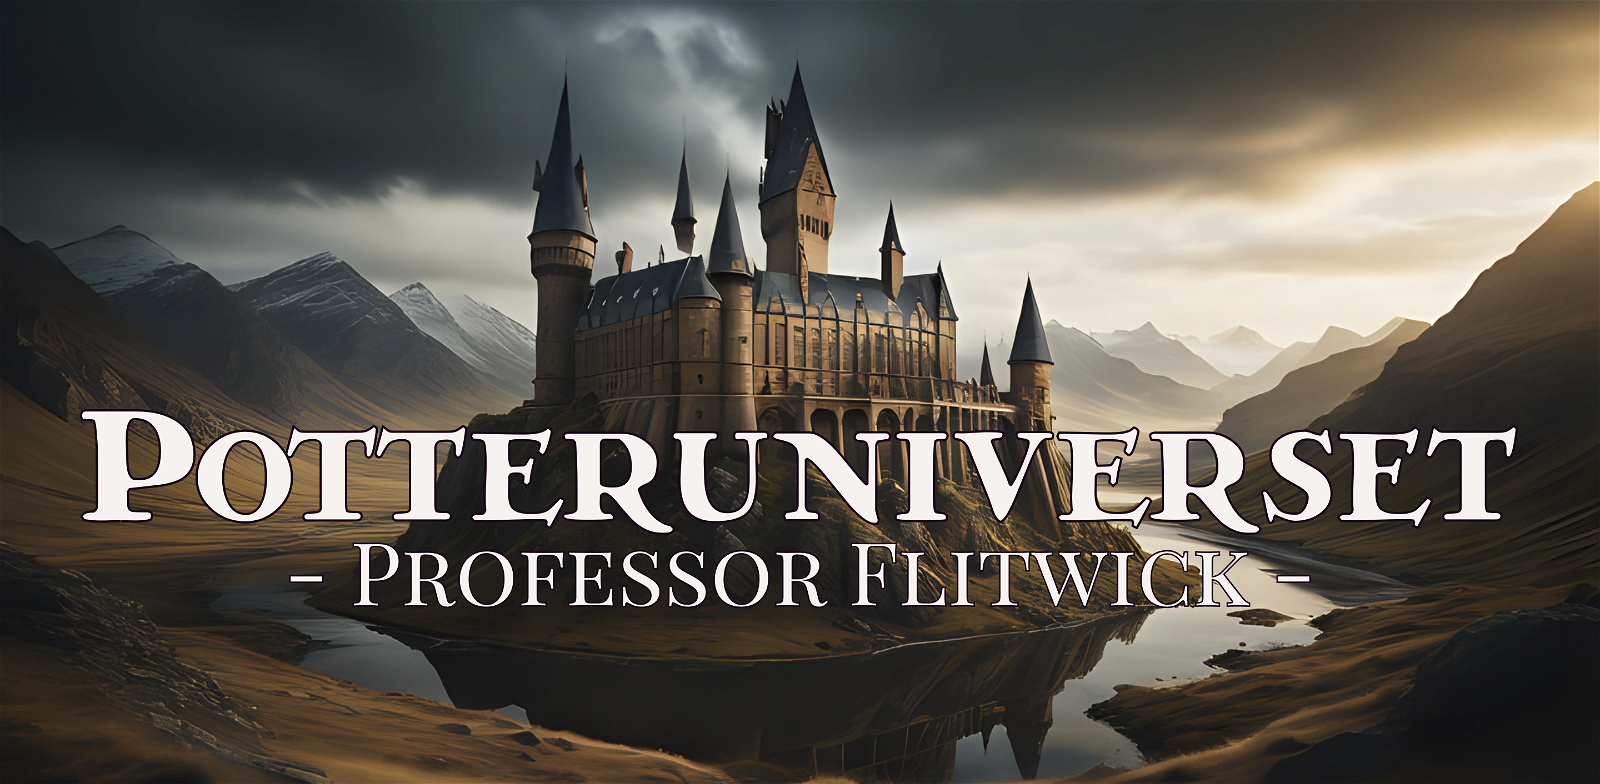 Potteruniverset: Professor Flitwick